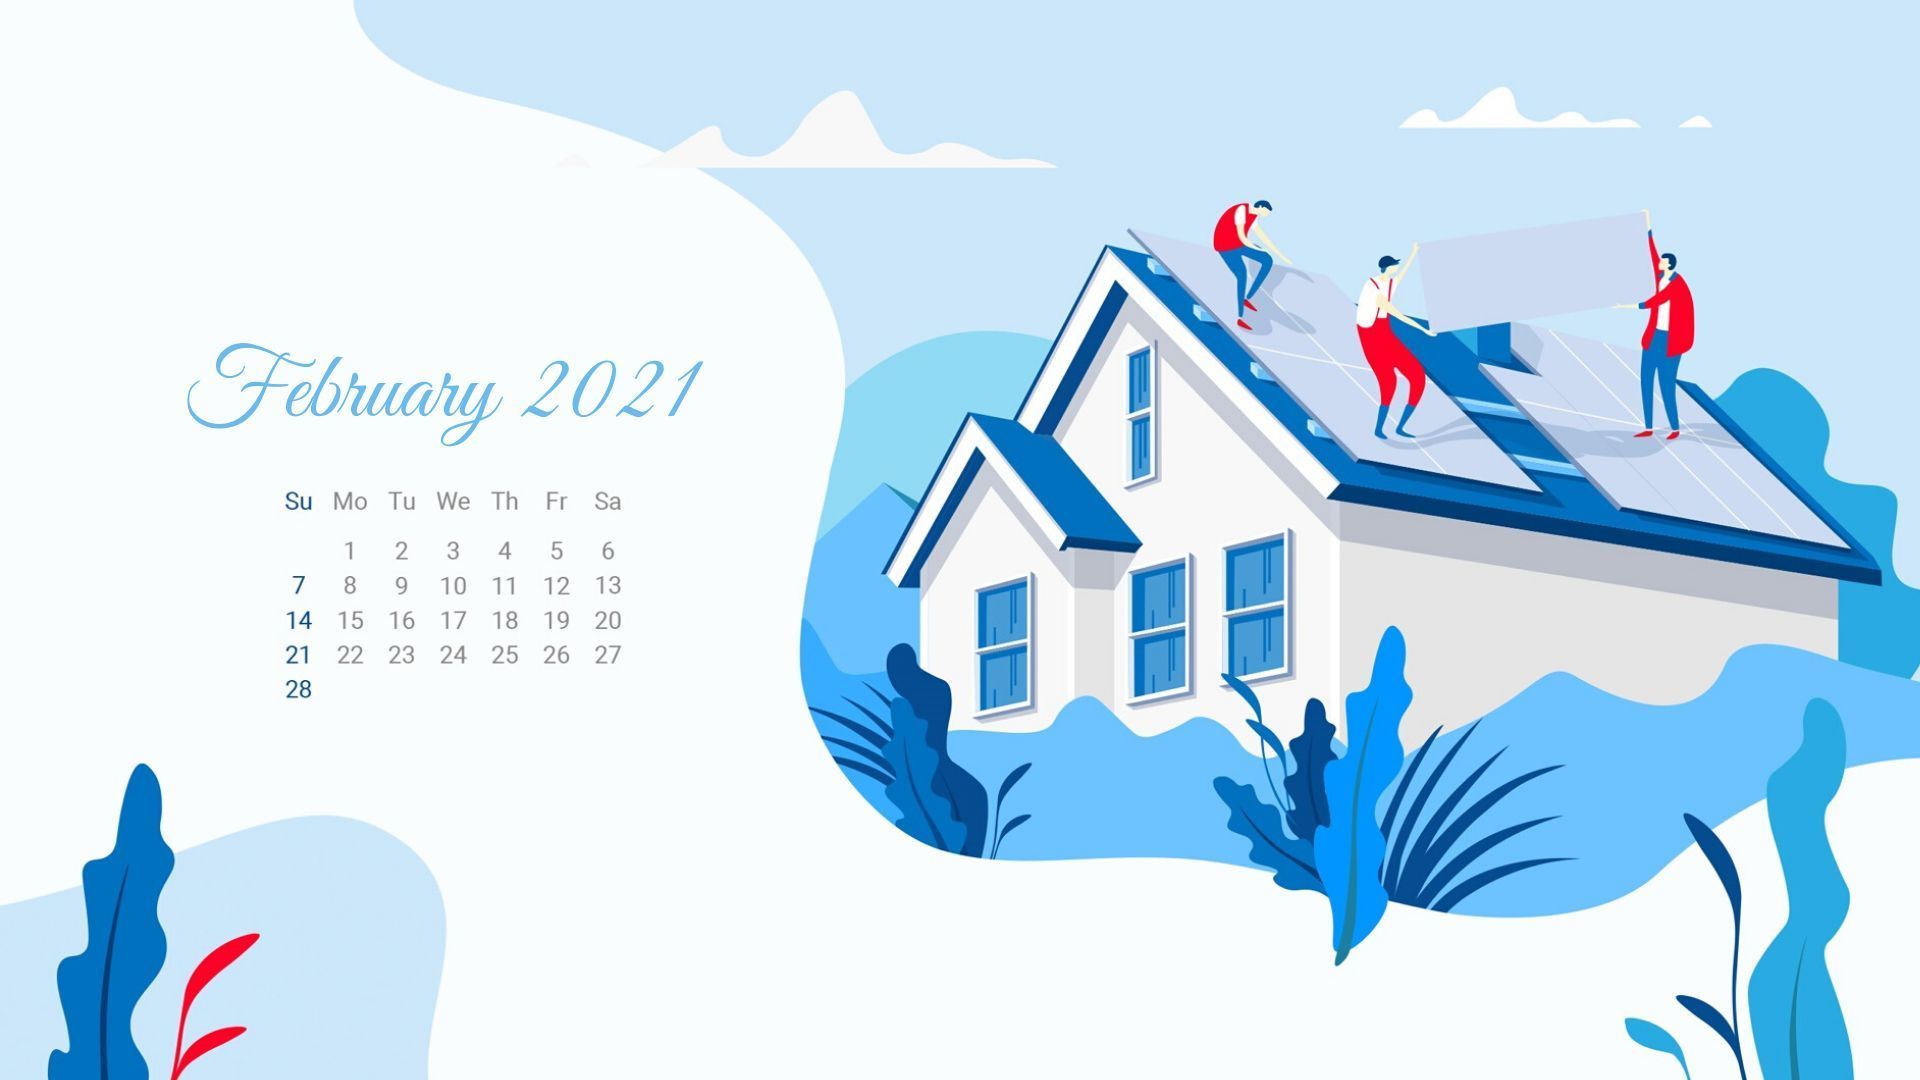 January 2021 Wallpaper For Desktop Image ID 14